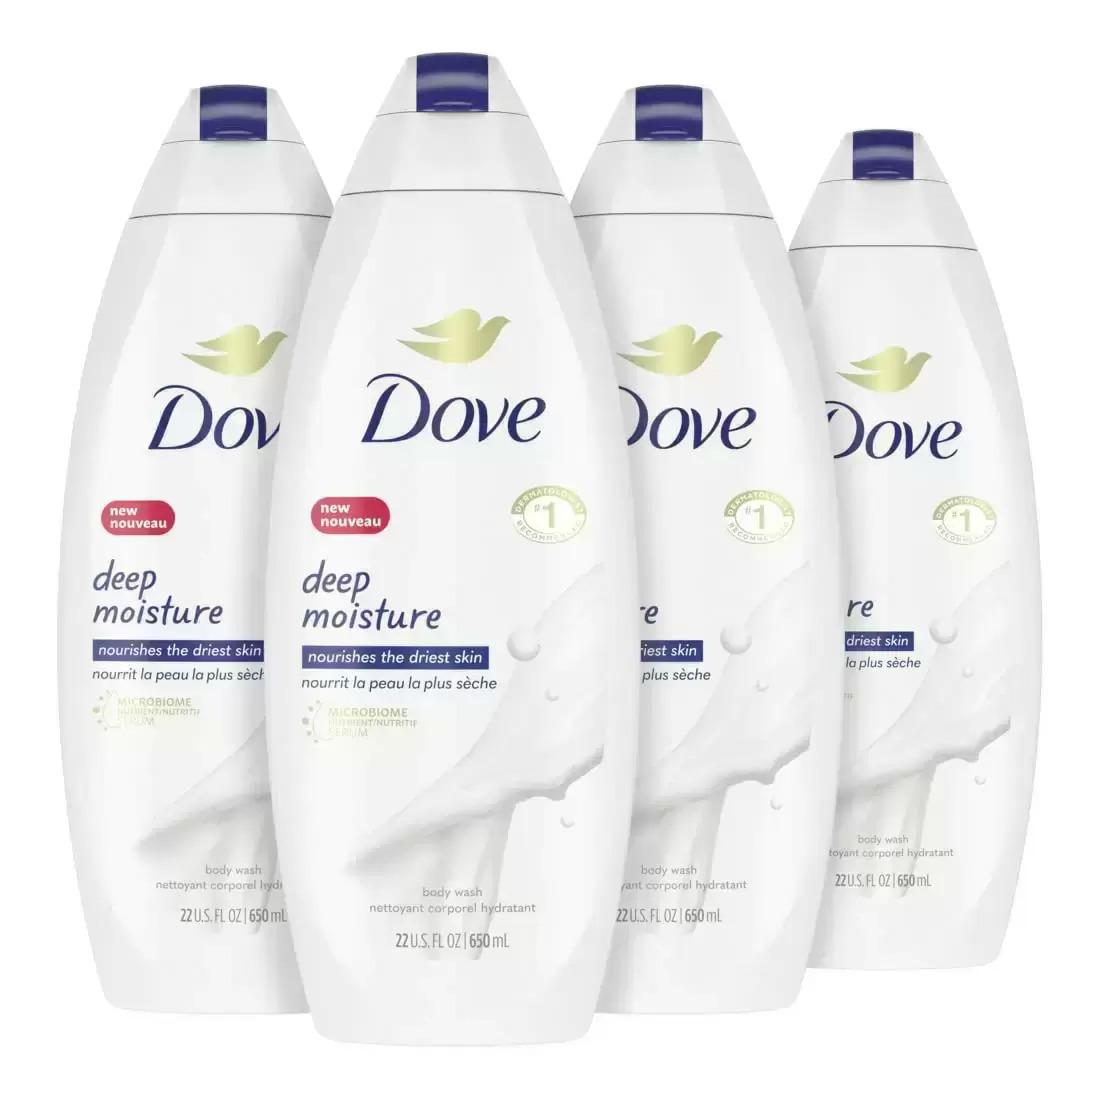 4 Dove Body Wash Deep Moisture for $13.68 Shipped